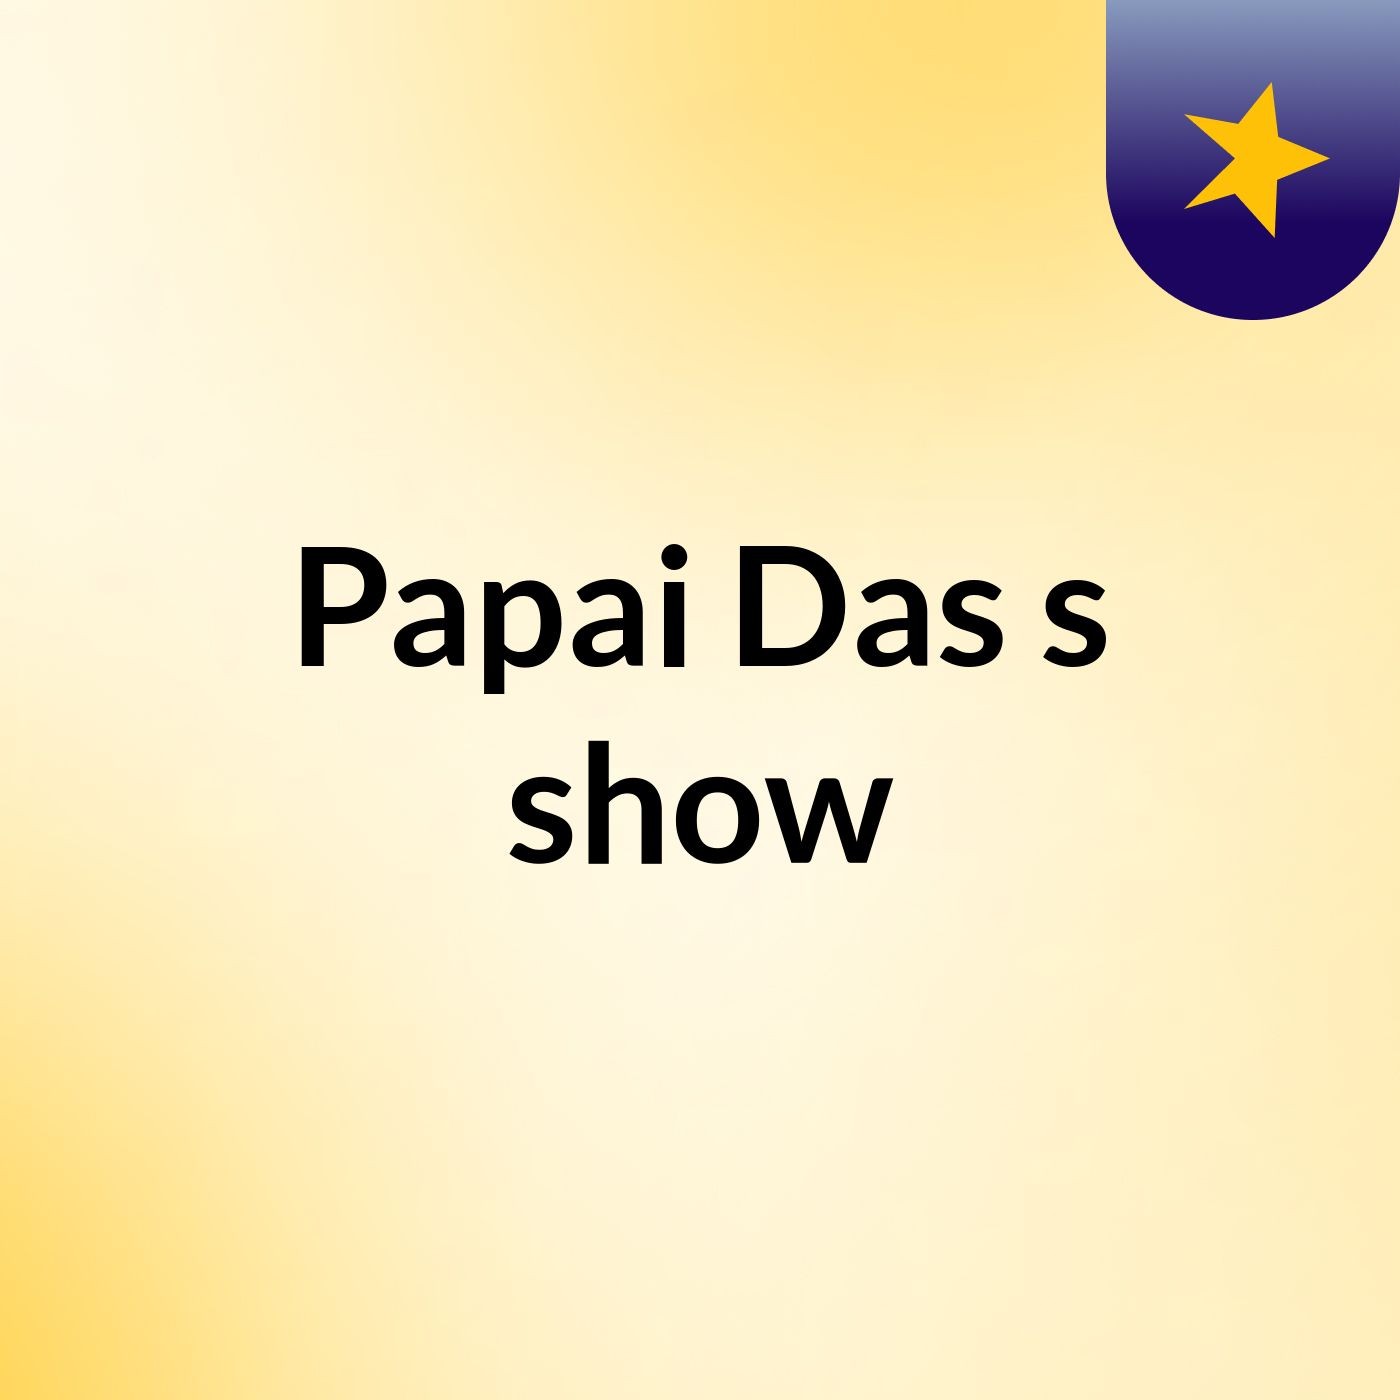 Papai Das's show